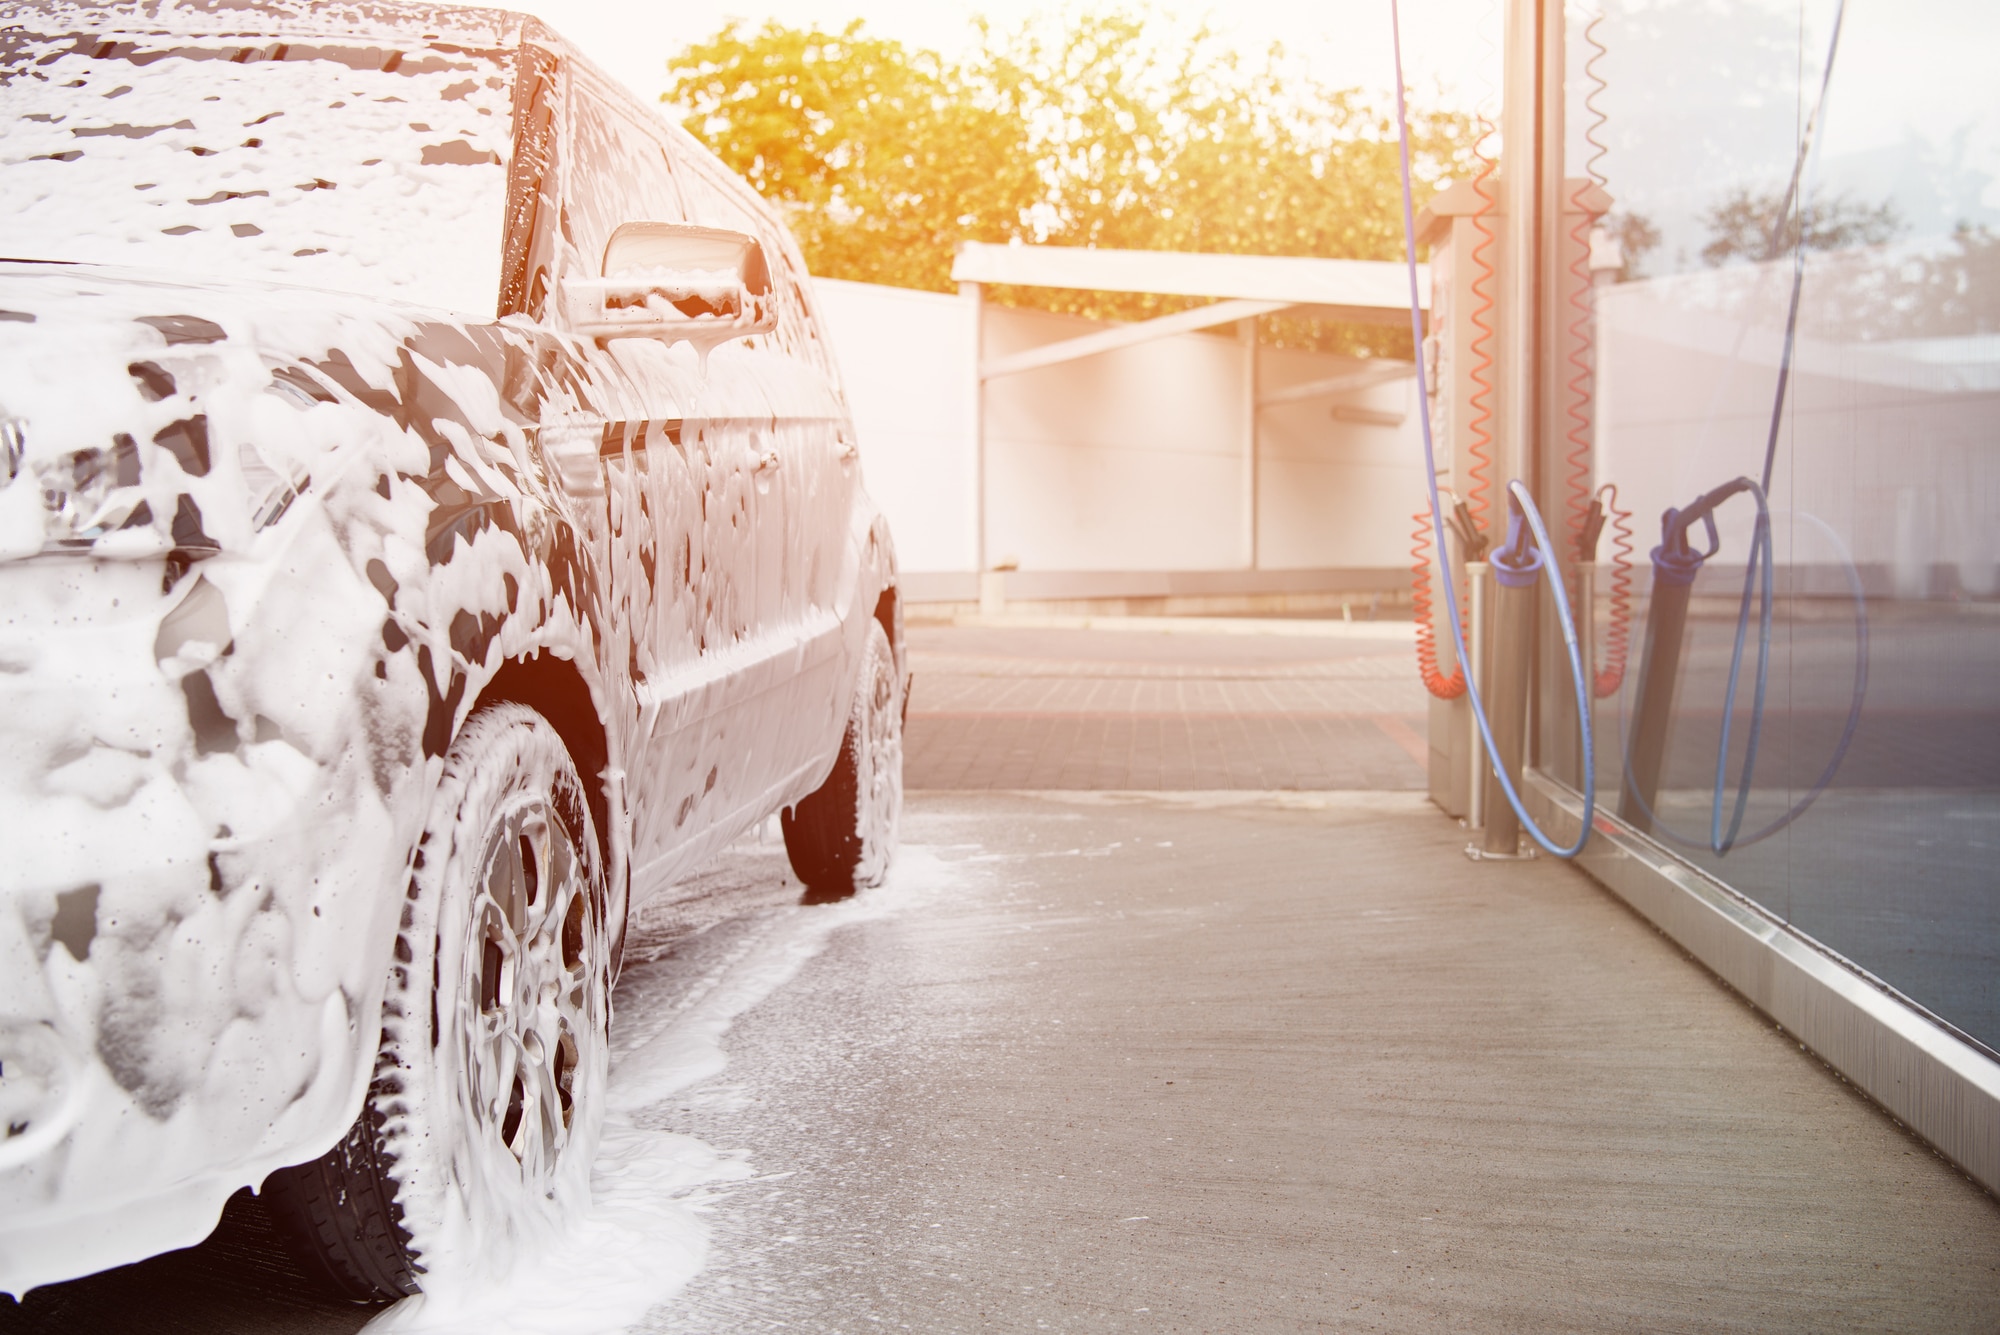 Can You Wash Tesla In Car Wash